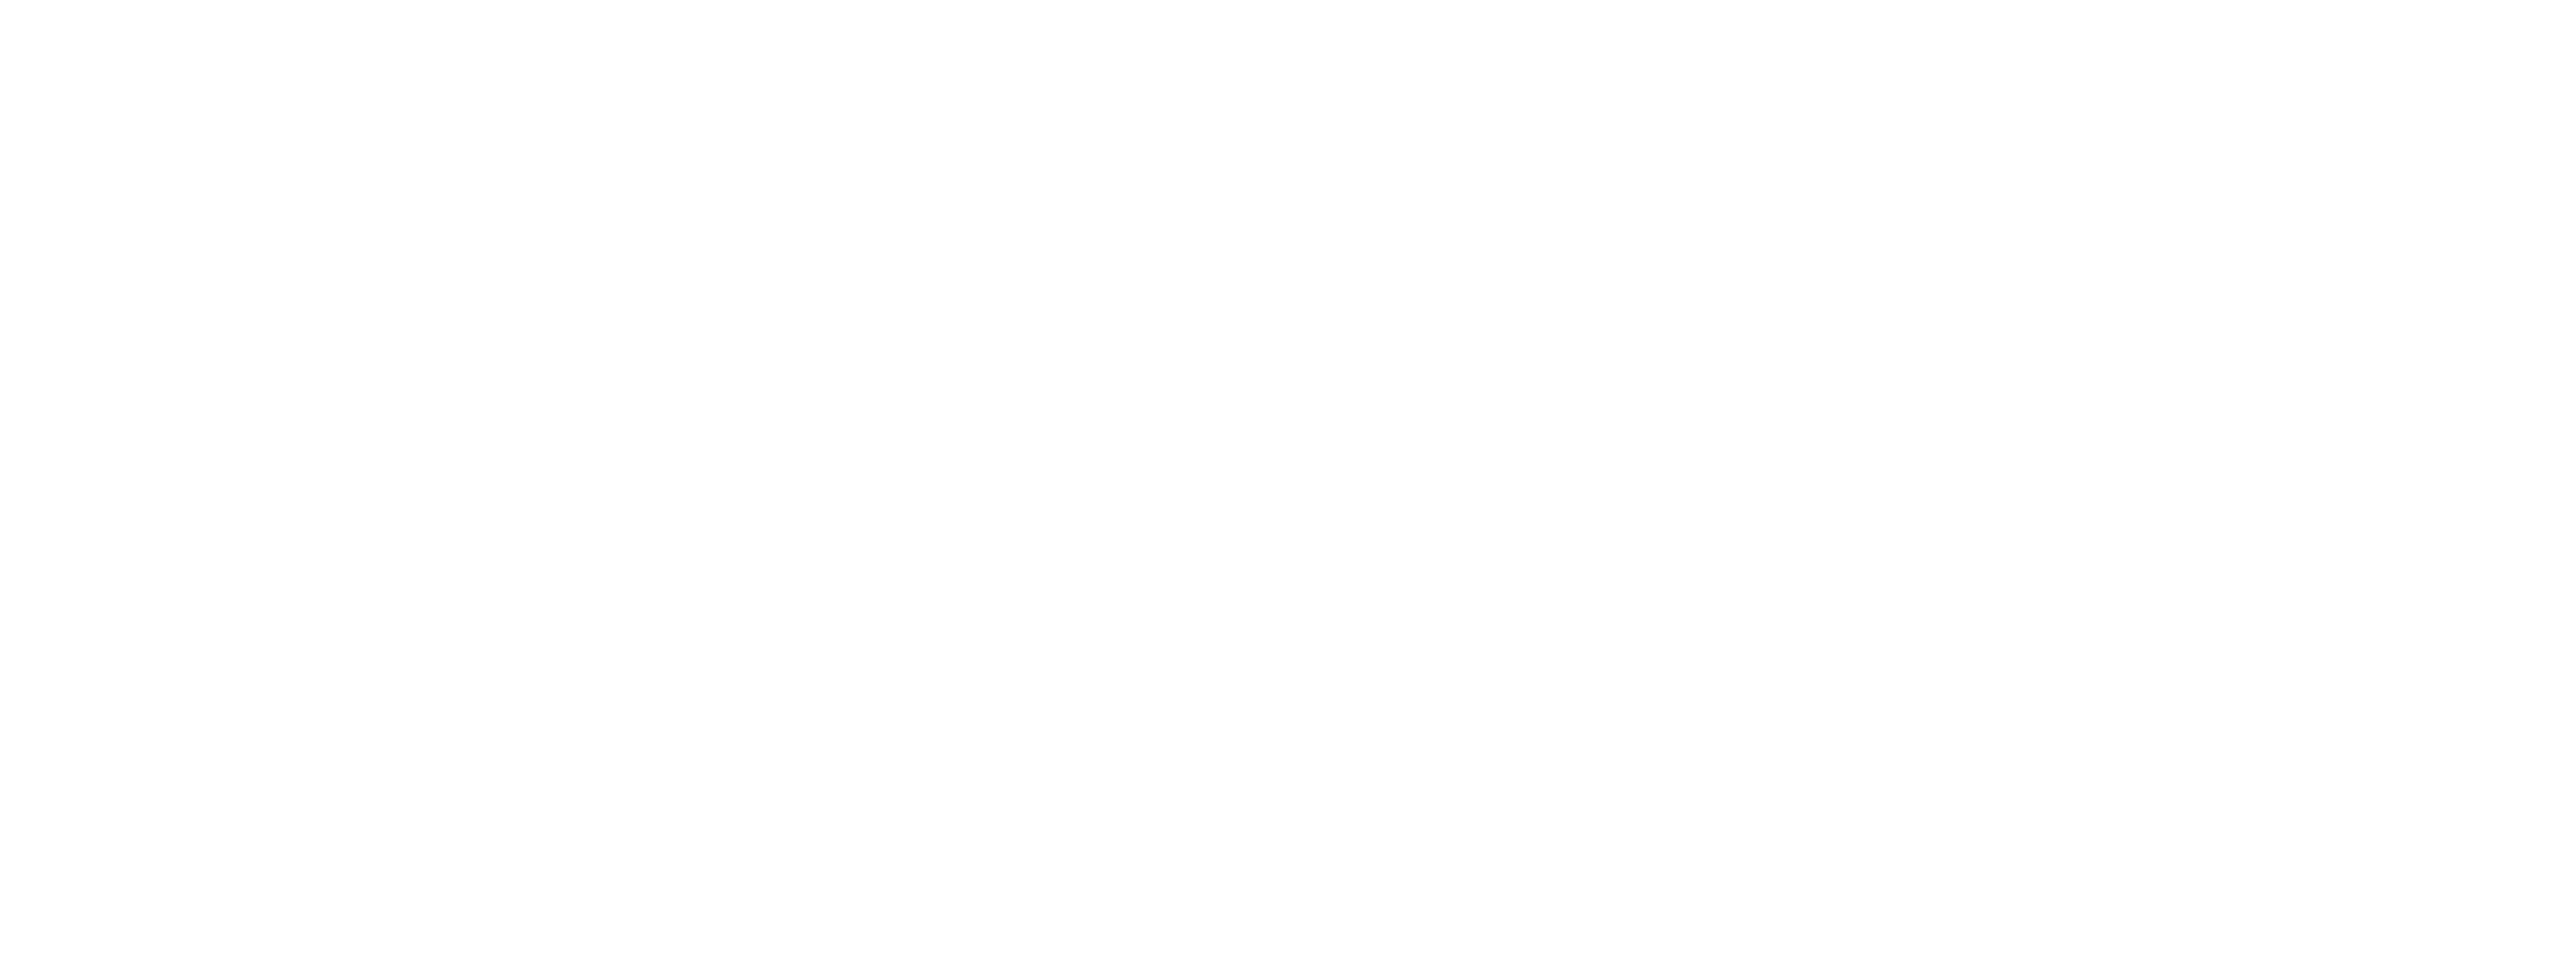 S4G Drone Services logo